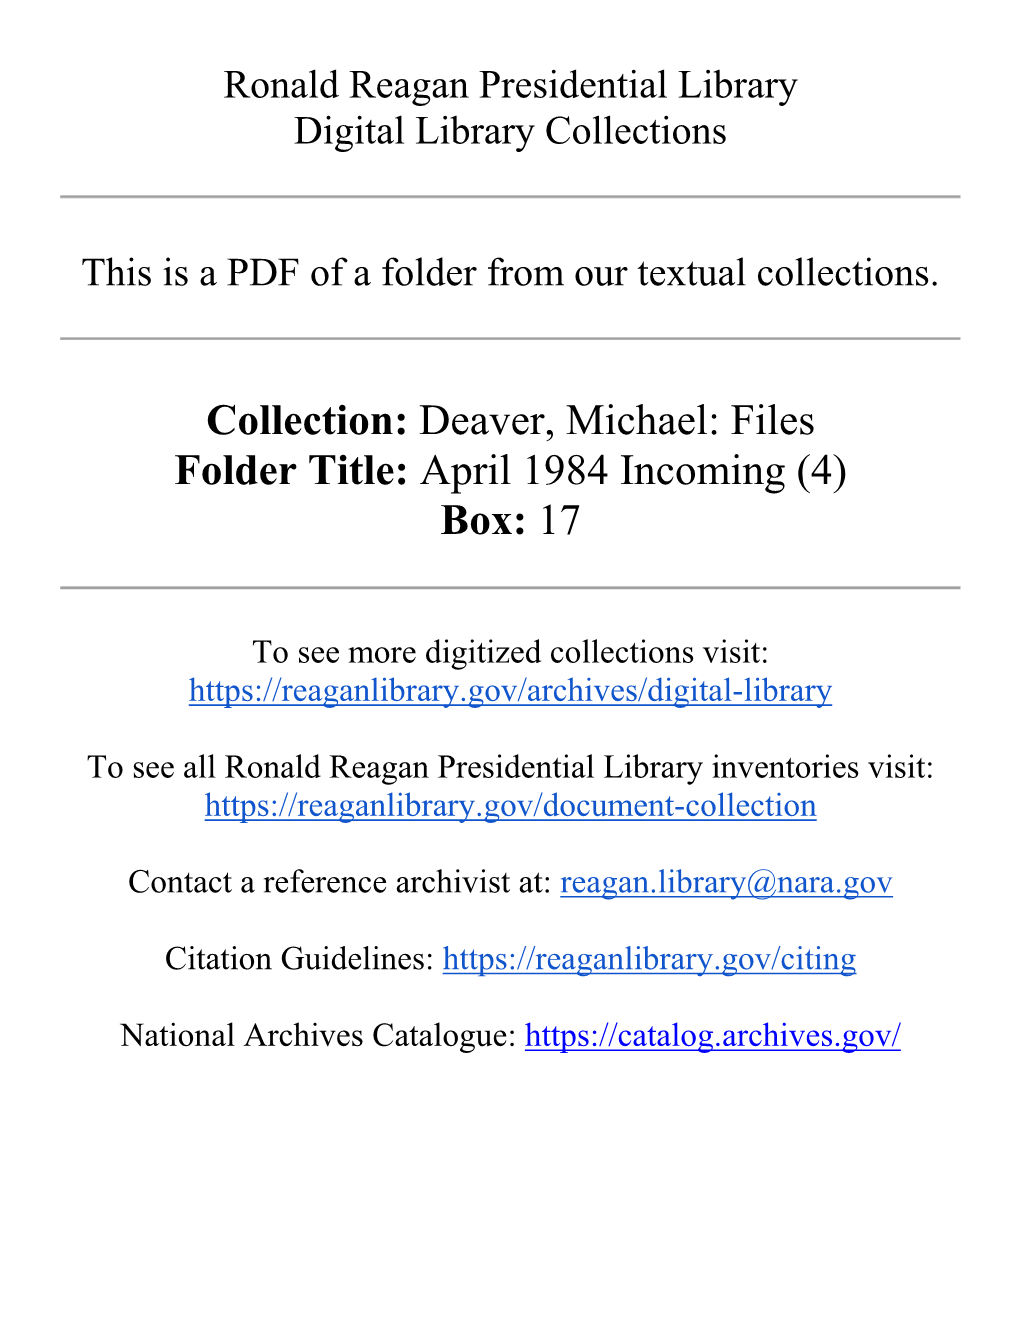 Deaver, Michael: Files Folder Title: April 1984 Incoming (4) Box: 17